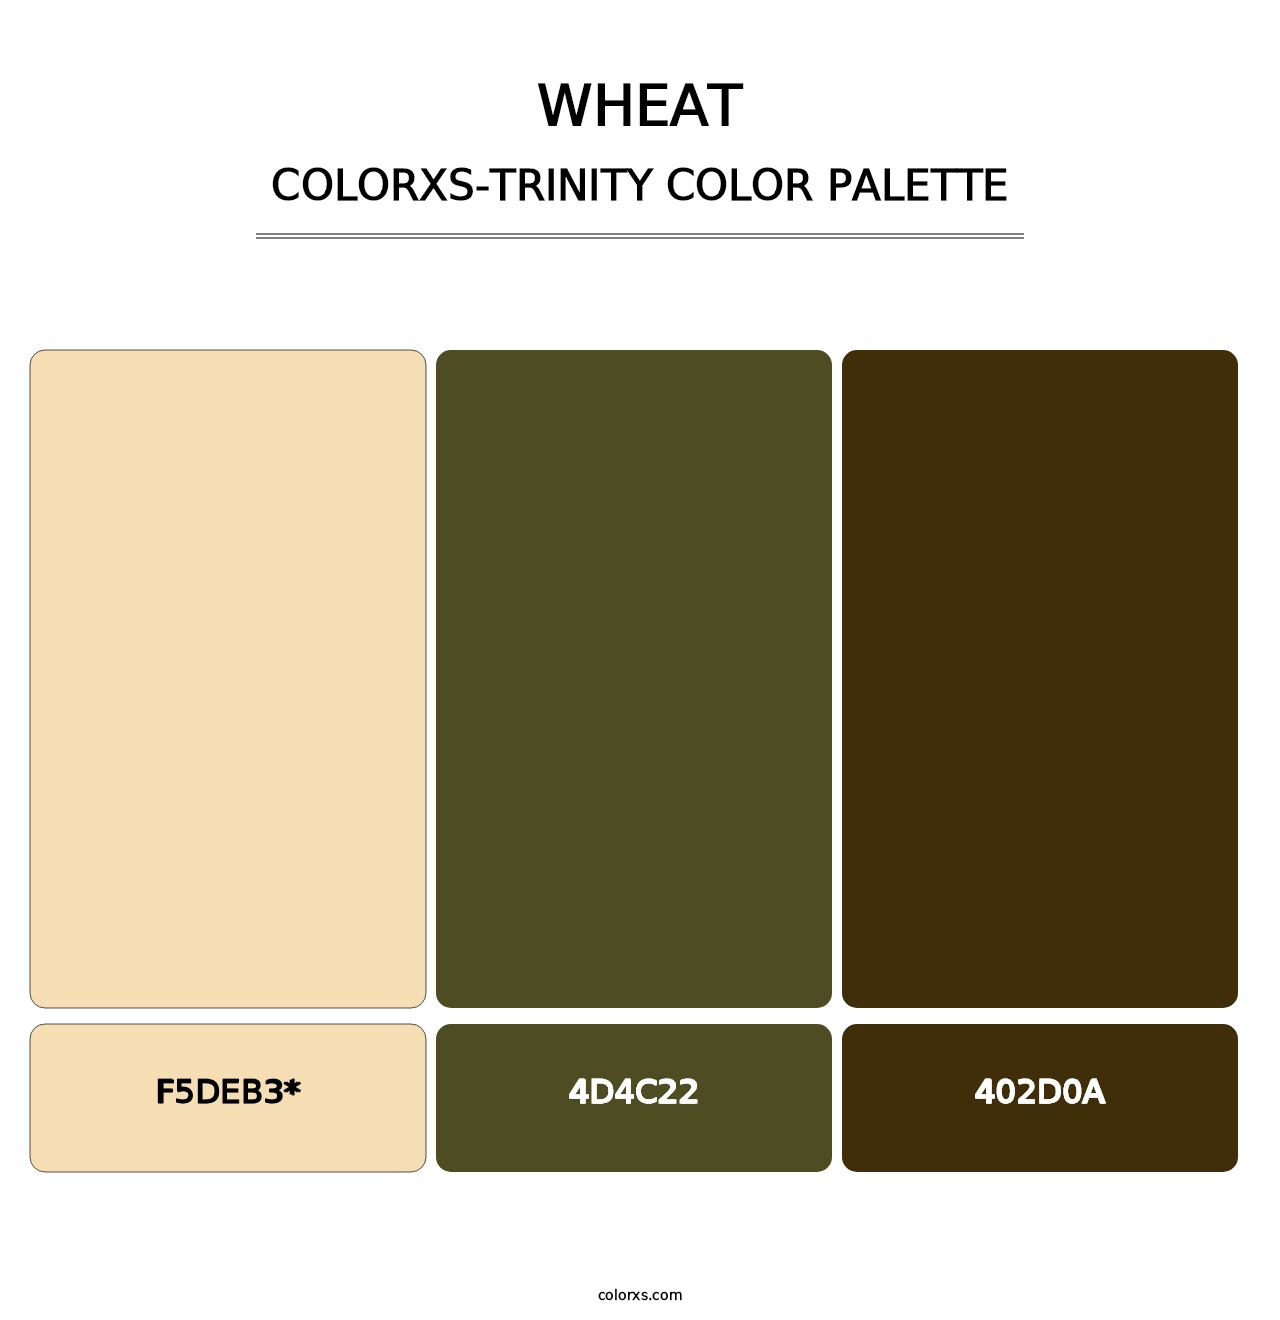 Wheat - Colorxs Trinity Palette